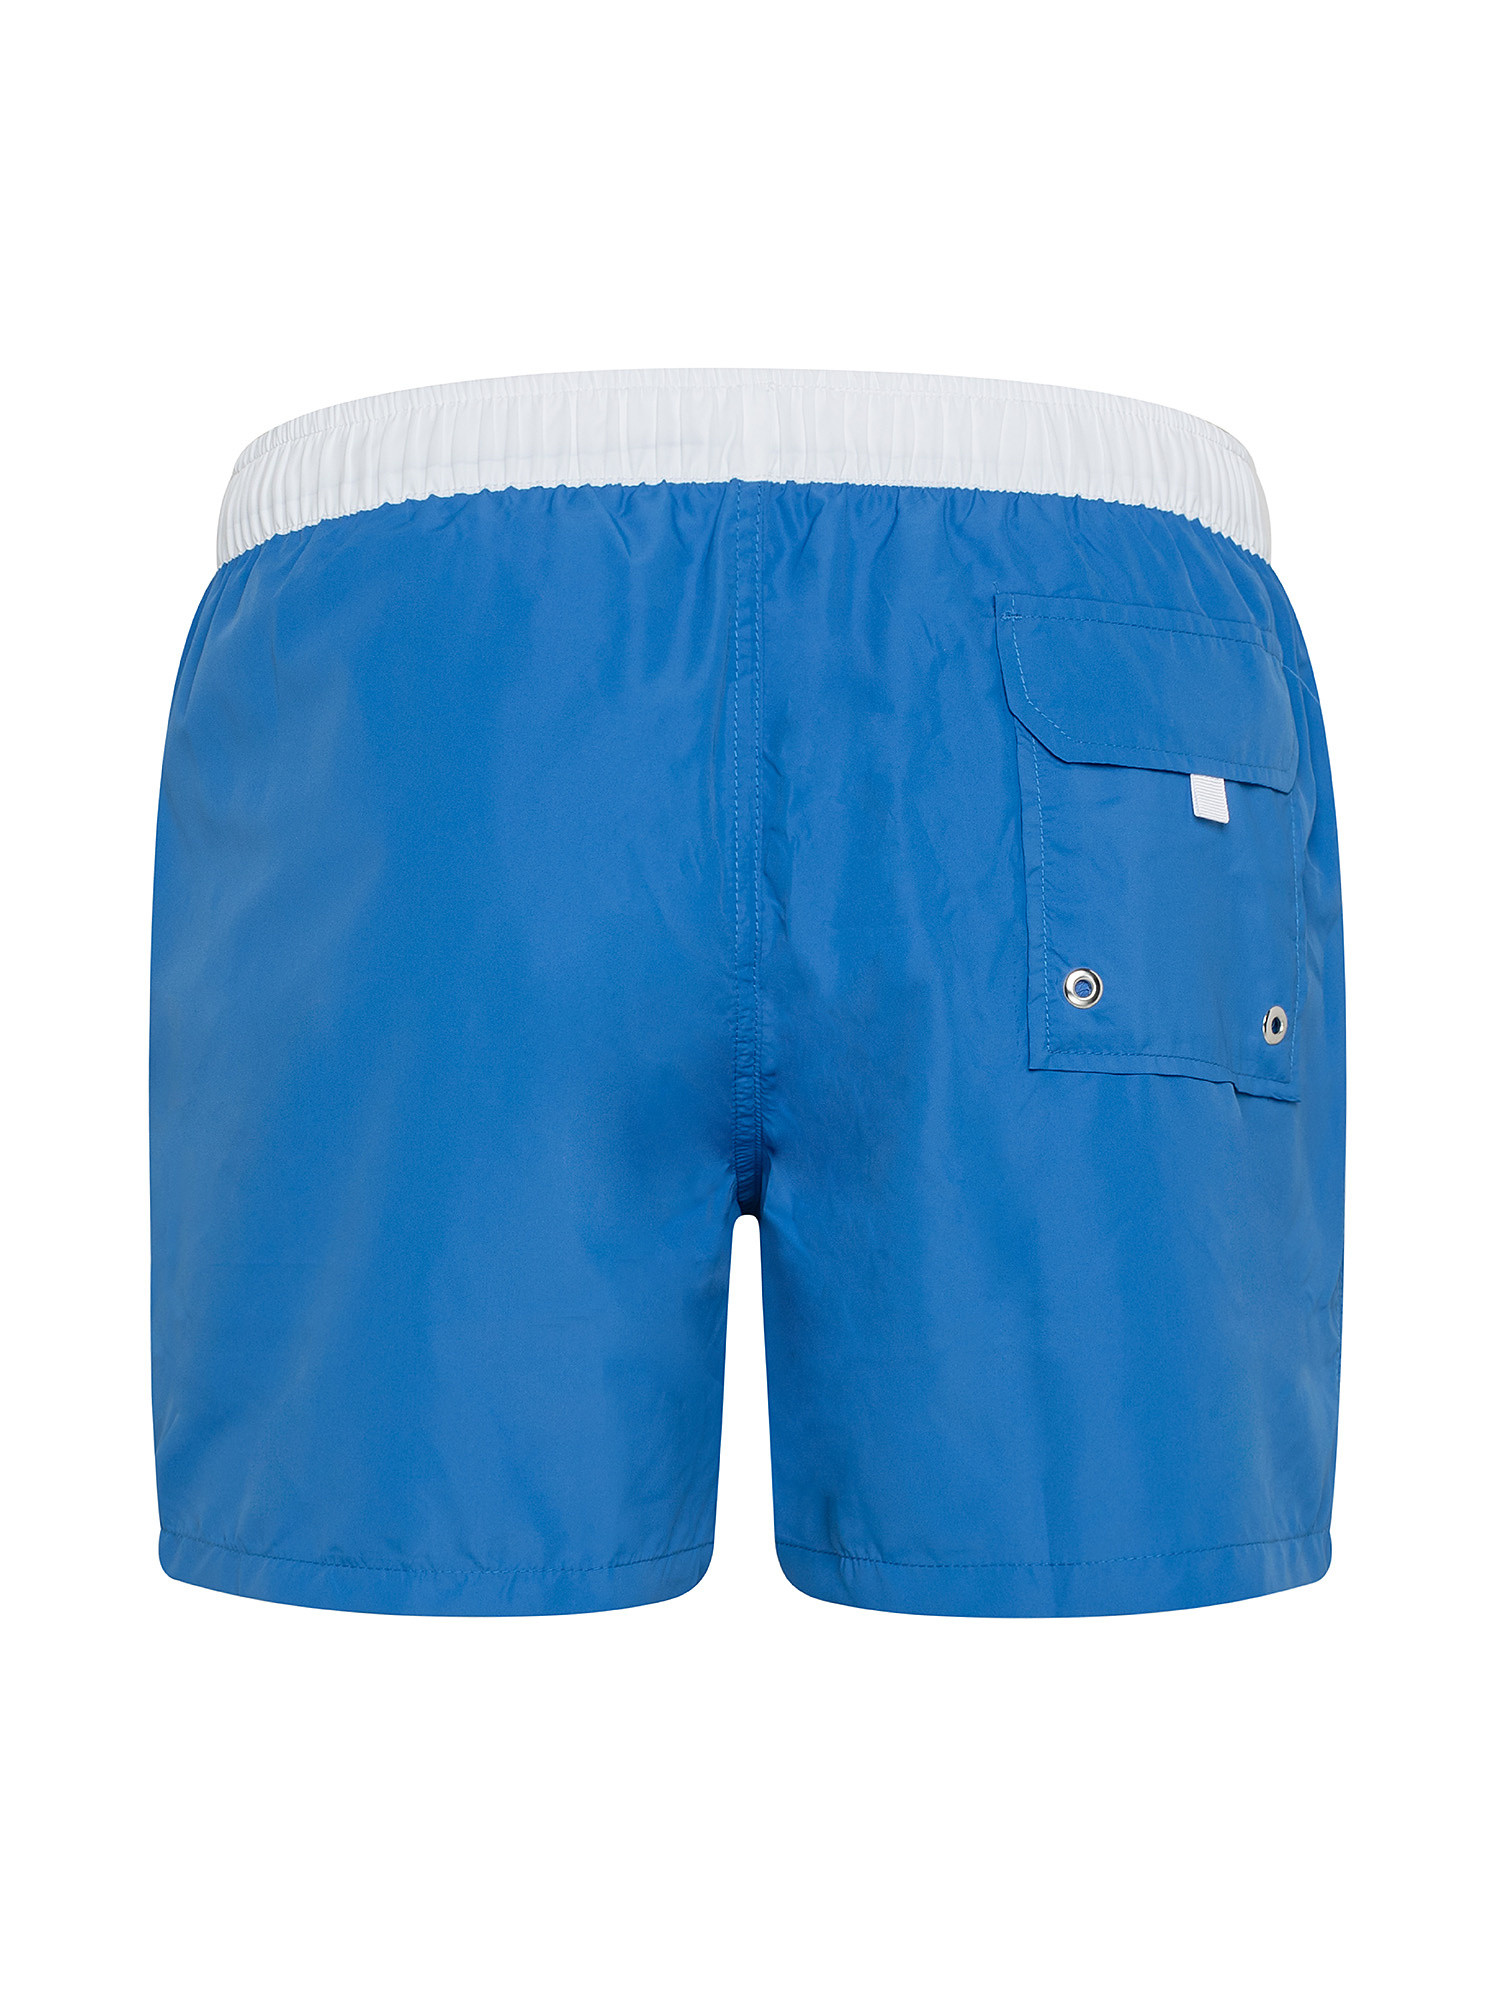 Nylon swim shorts with regular fit drawstring, Light Blue, large image number 1